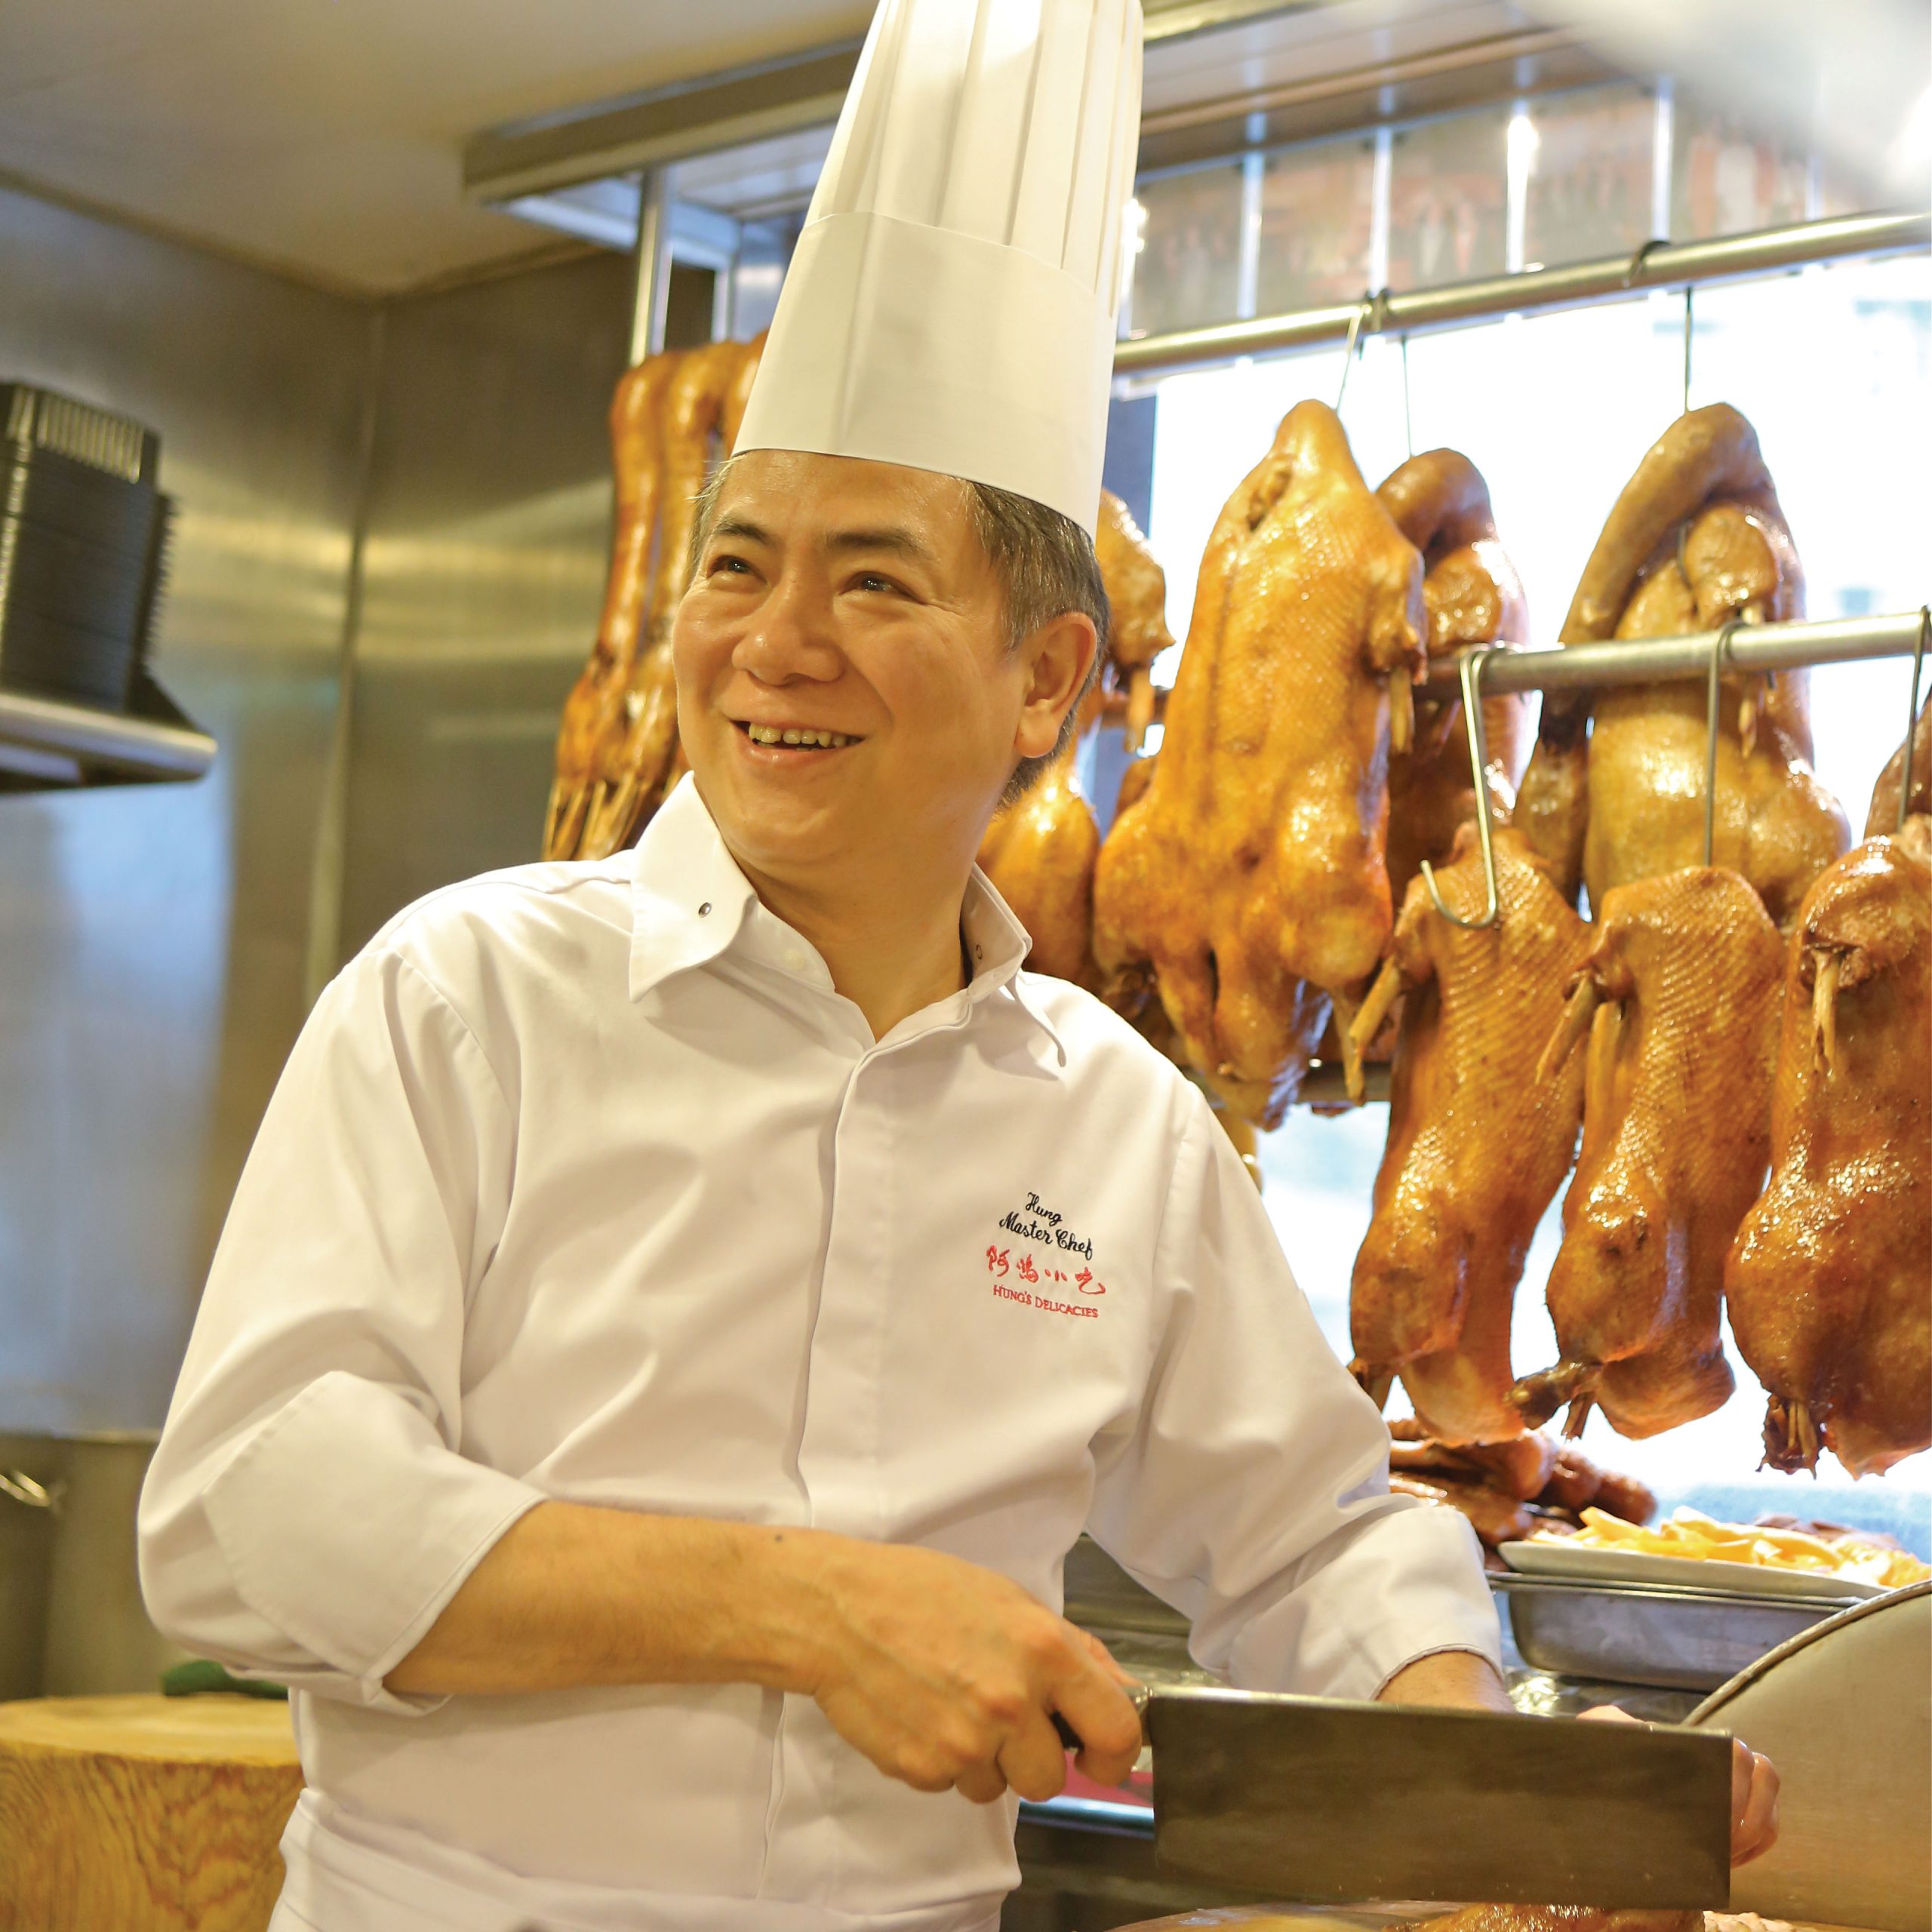 Chef Lai Wai-Hung at work in Hong Kong's Michelin starred Hung's Delicacies